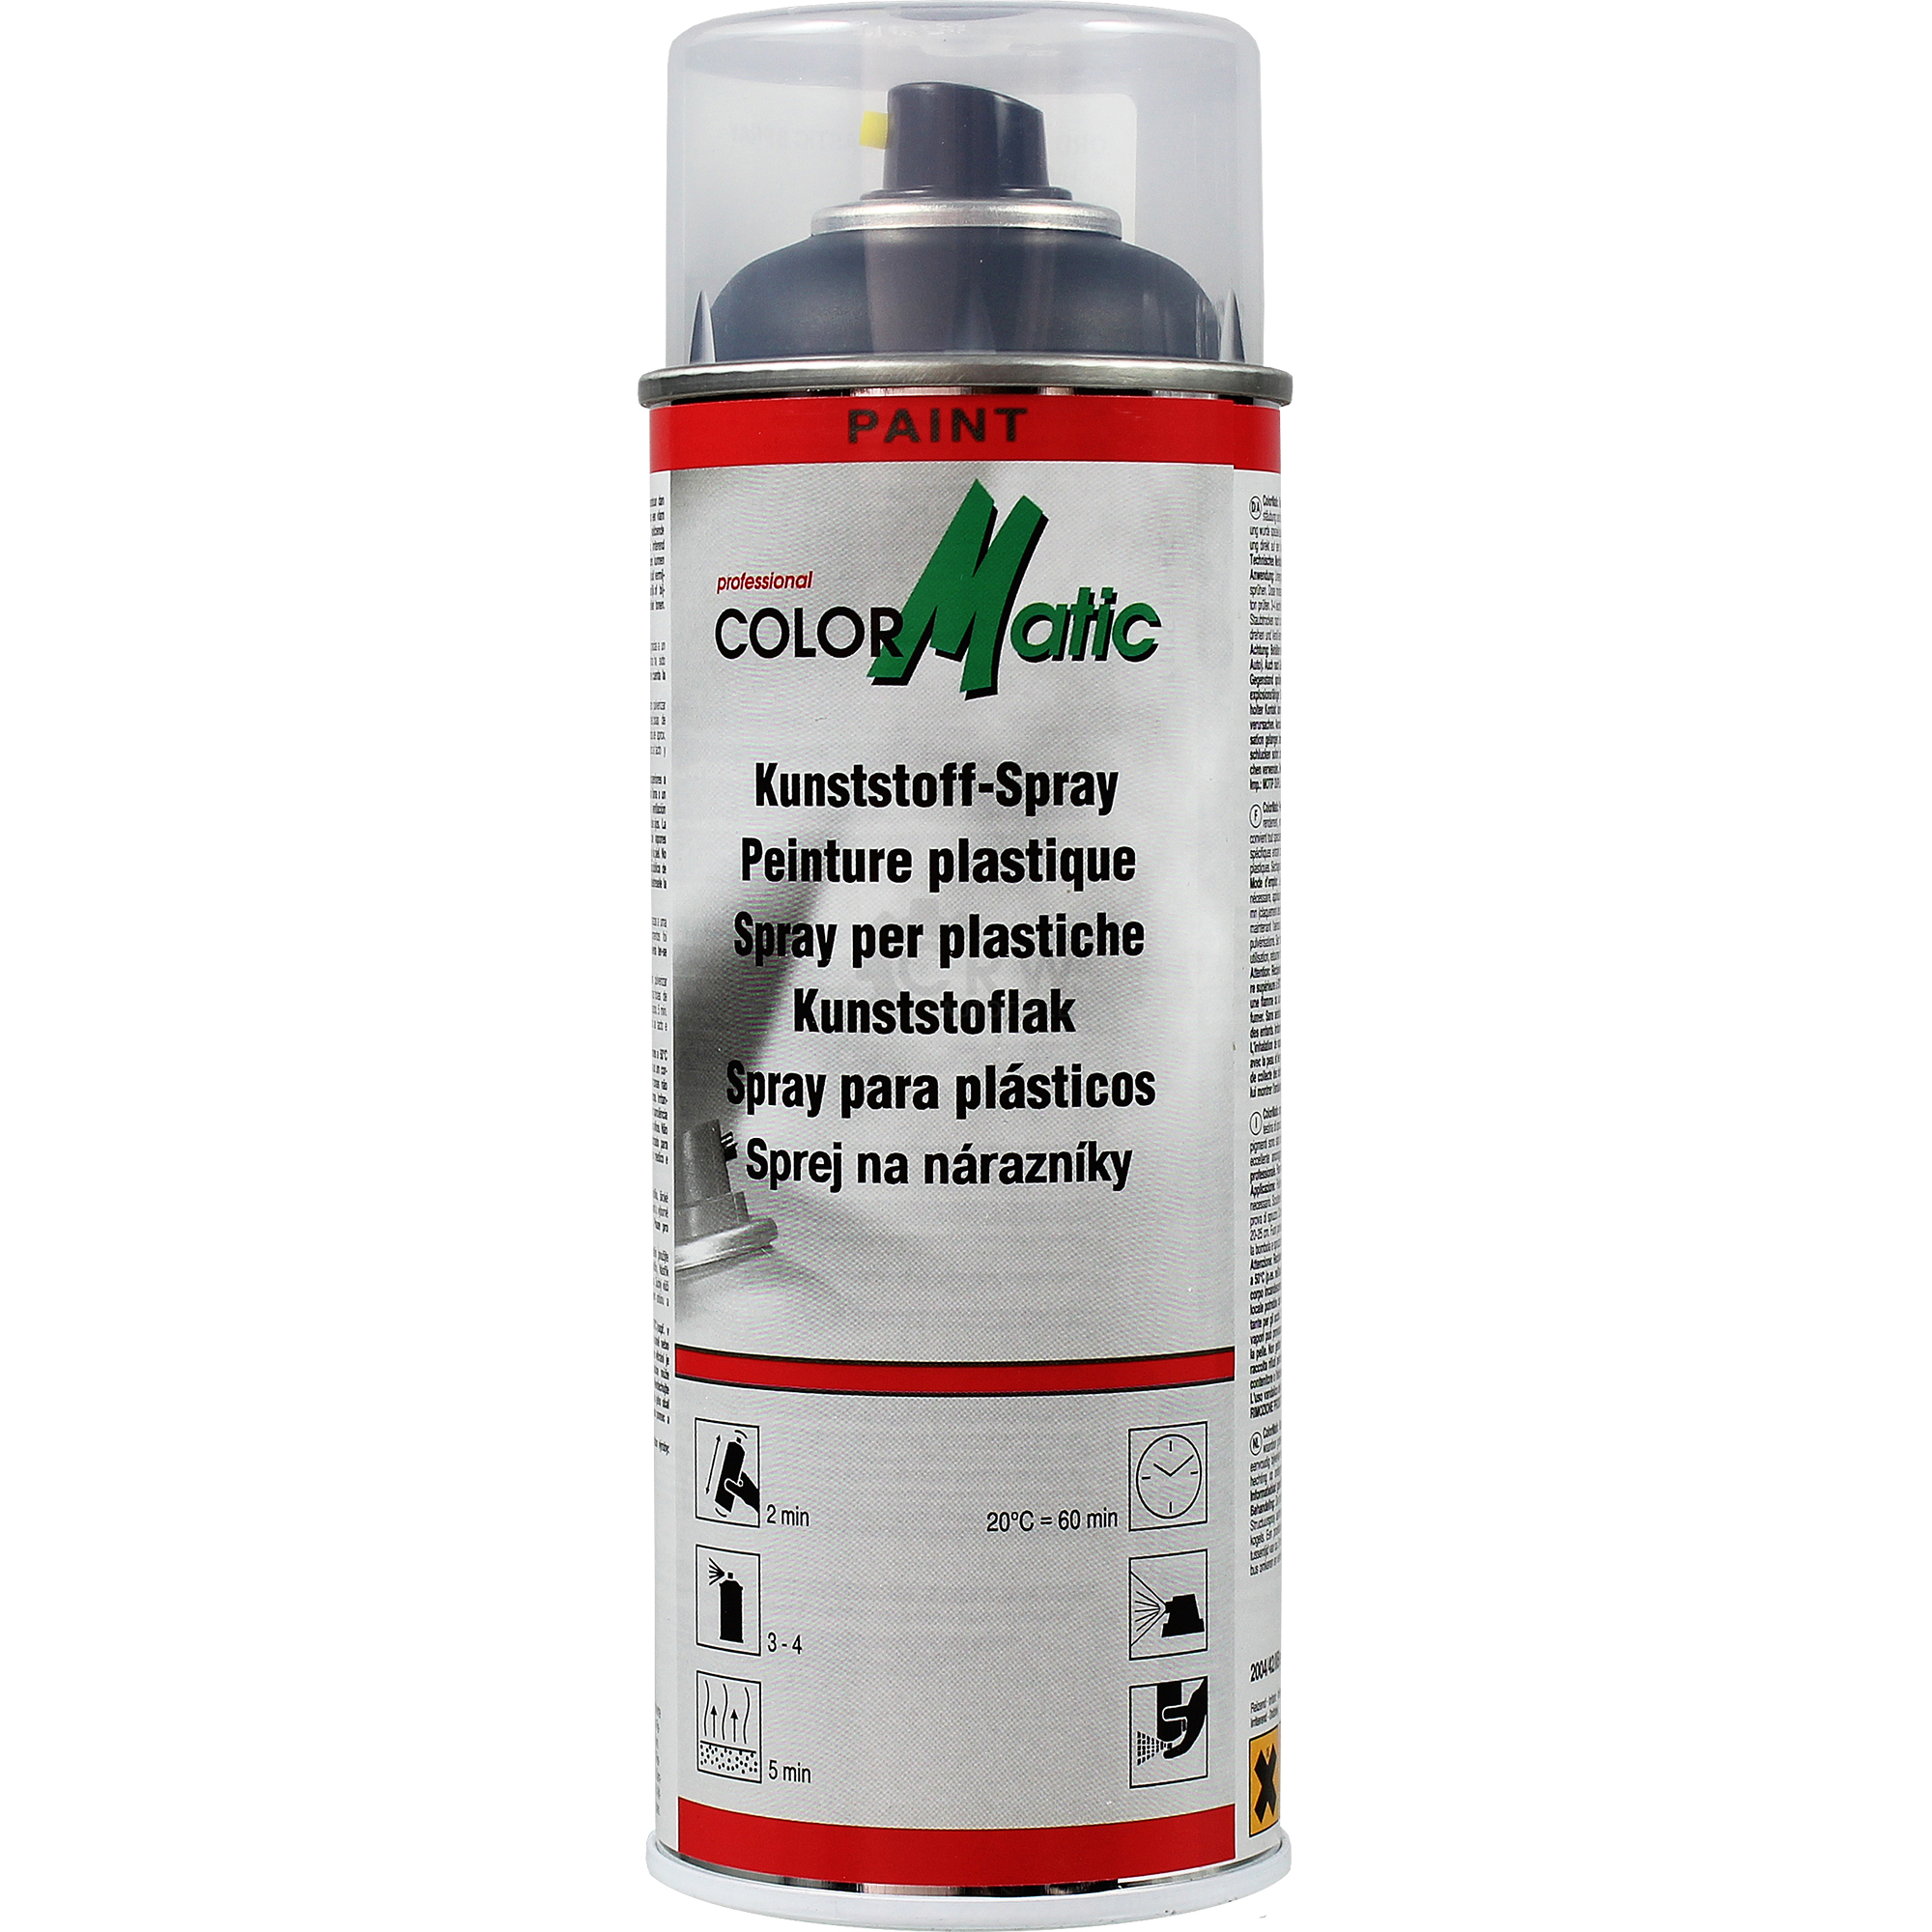 Colormatic Professional Kunststoffspray schwarz Plastikspray 400ml 856600